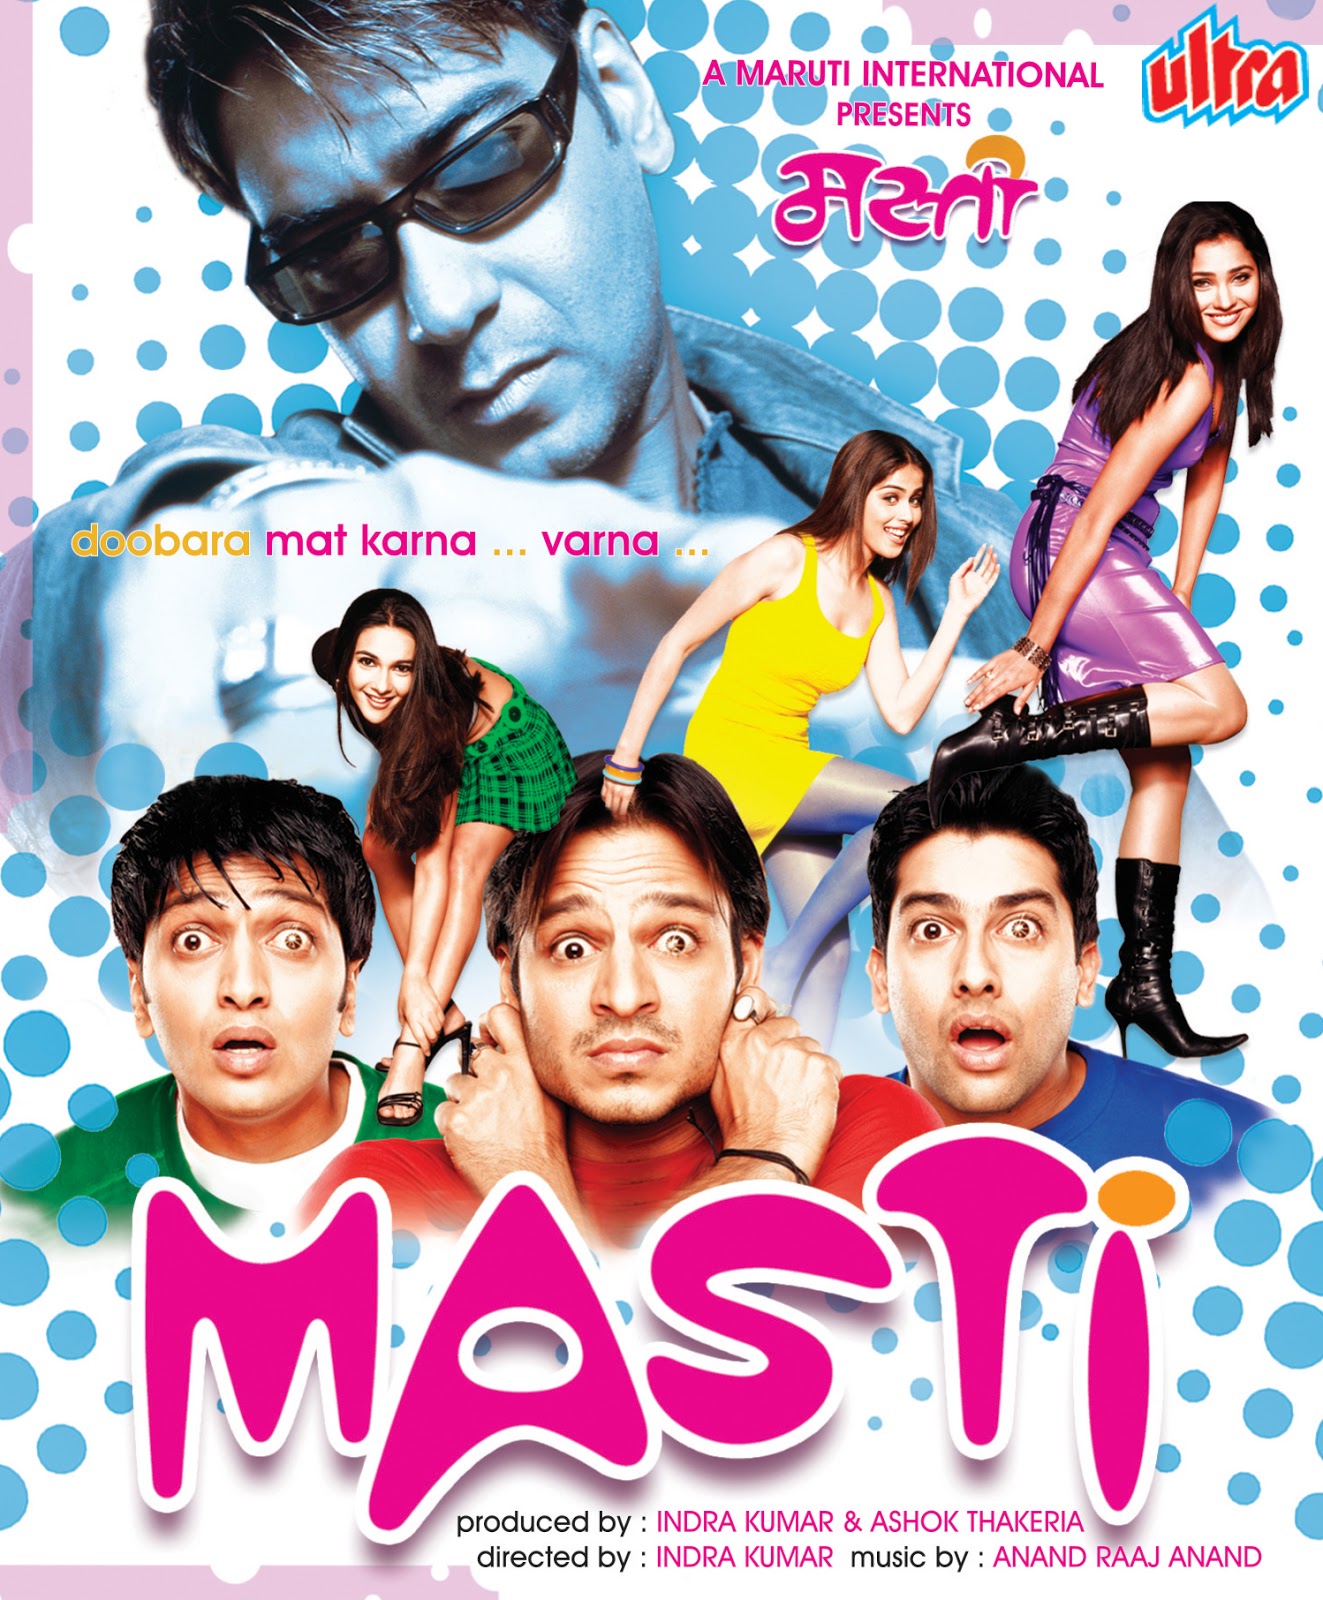 Grand Masti Tamil Movie Mp4 Free Download